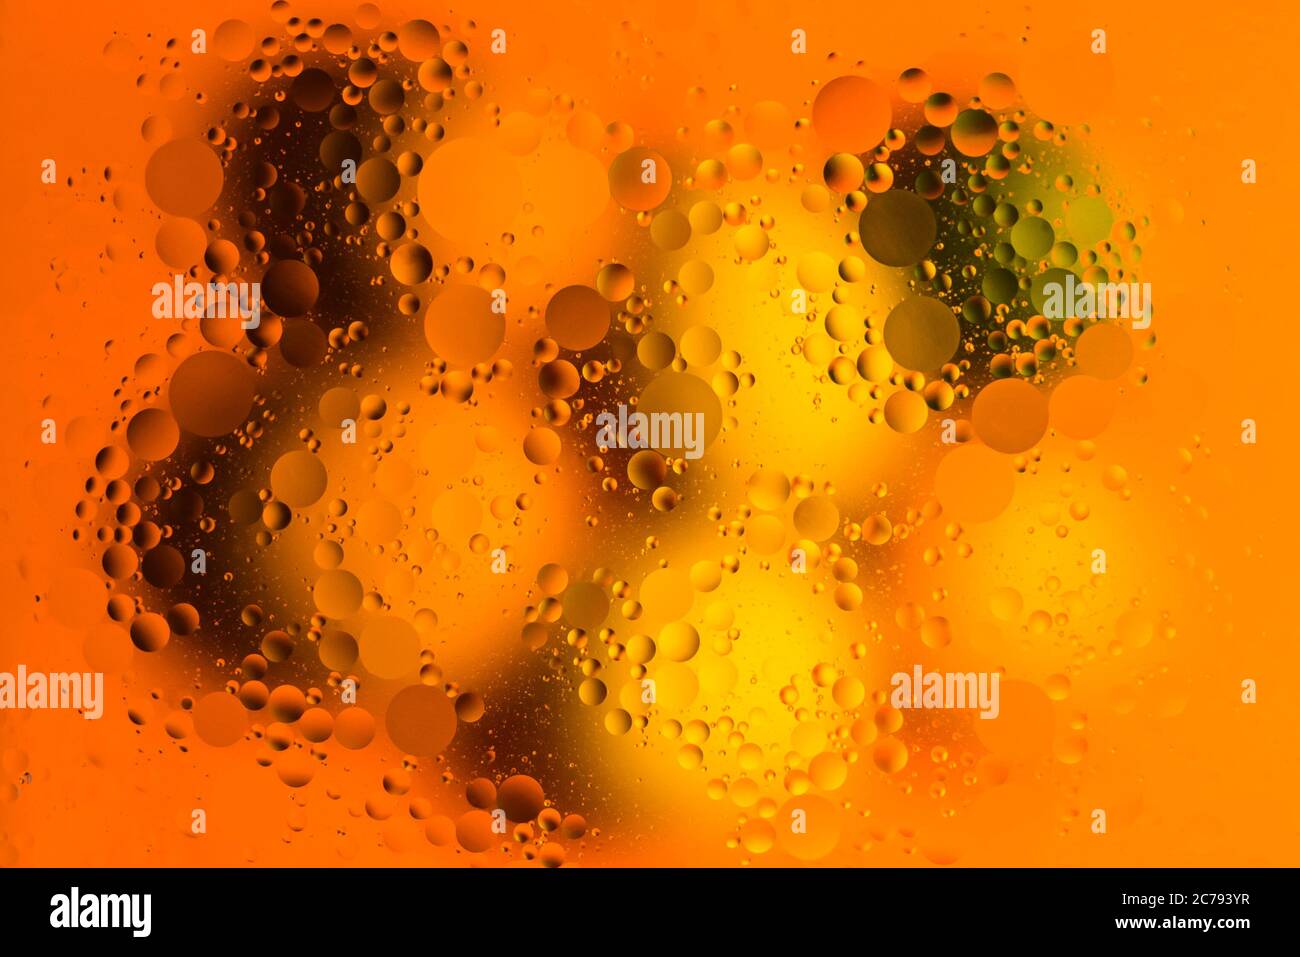 Estudio de primer plano imagen de gotas de aceite sobre el agua sobre un fondo de color naranja Foto de stock